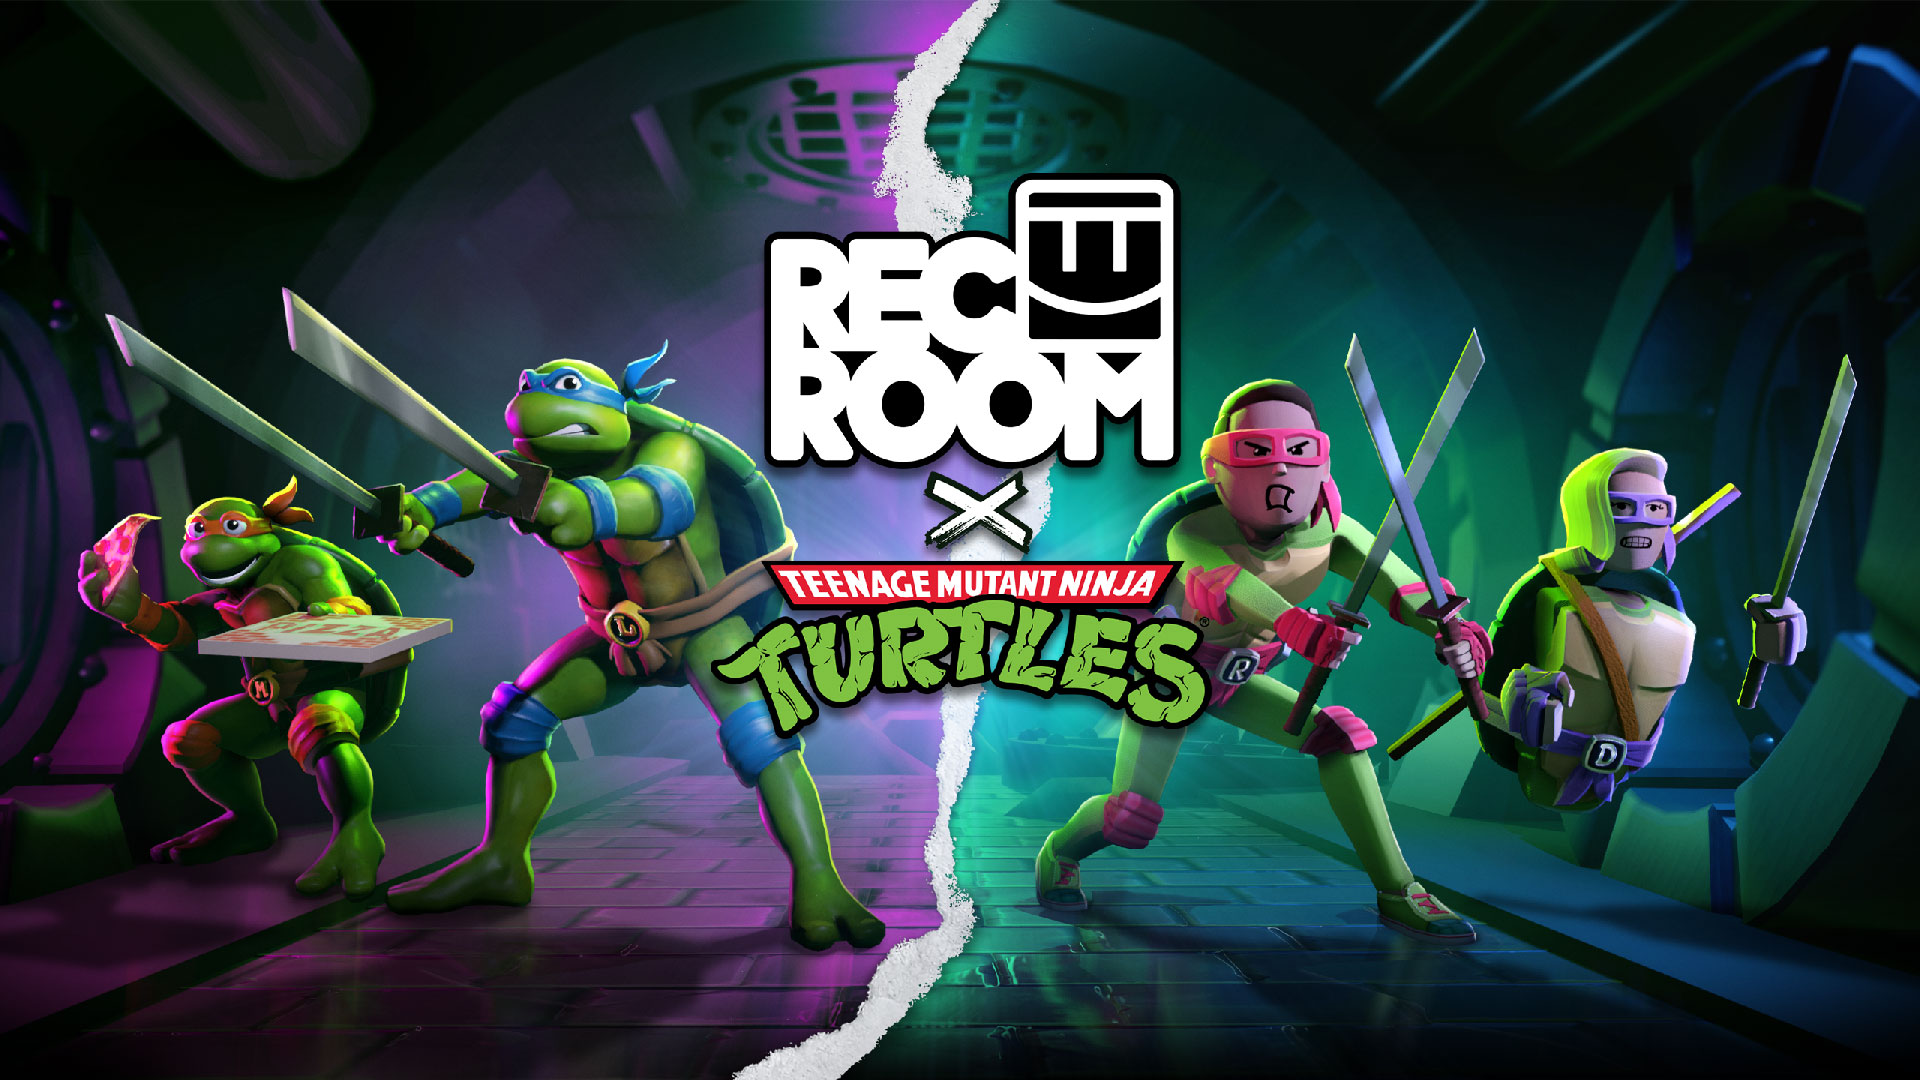 Teenage Mutant Ninja Turtles Co-op Adventure Comes to ‘Rec Room’